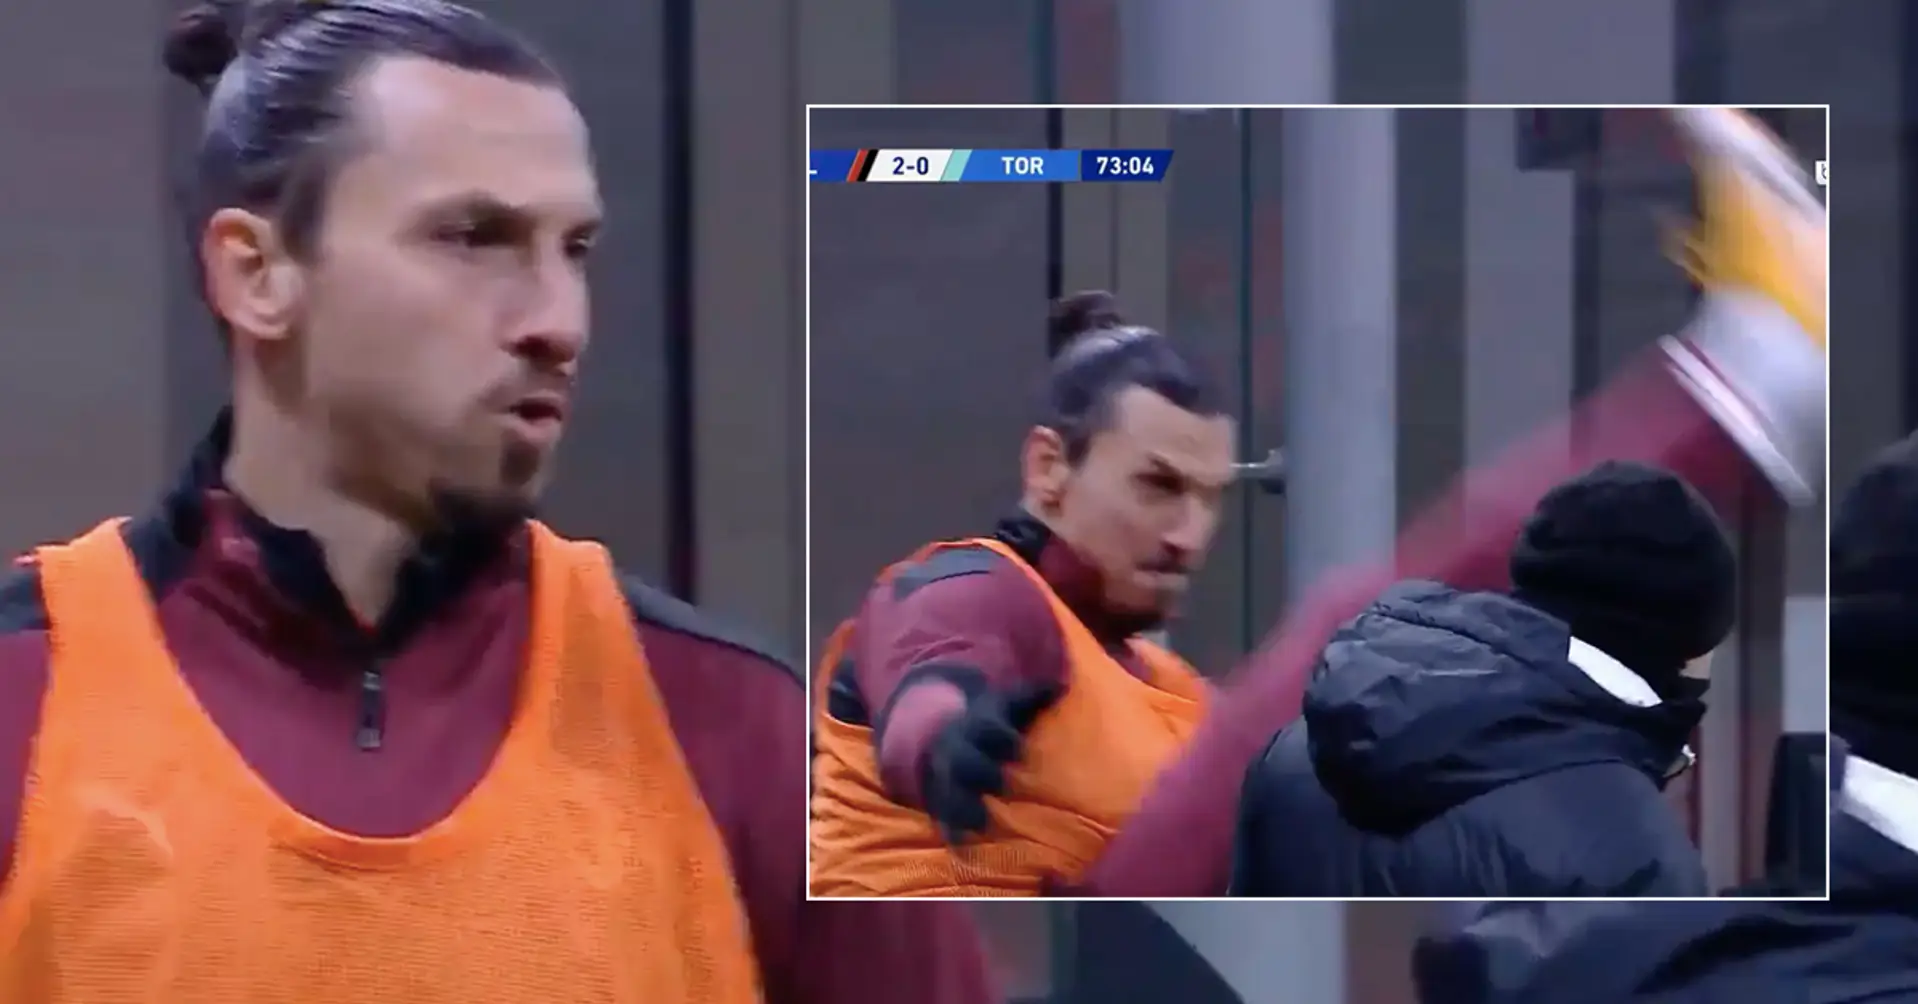 39-year-old Zlatan Ibrahimovic performs incredible warm-up routine